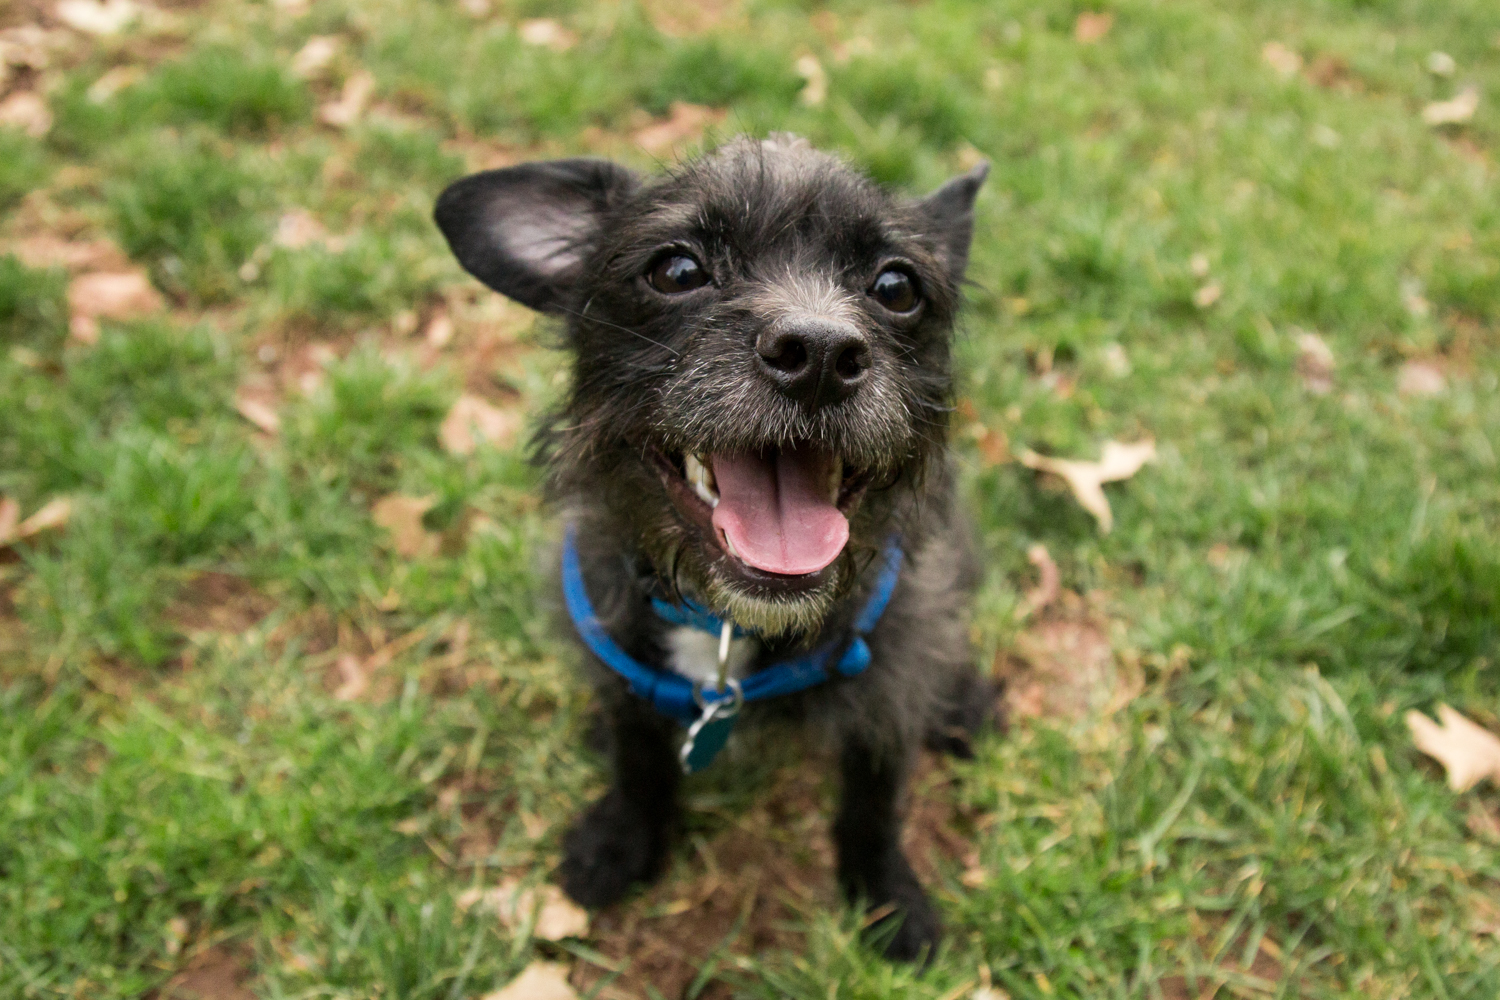 Smiling rescue dog